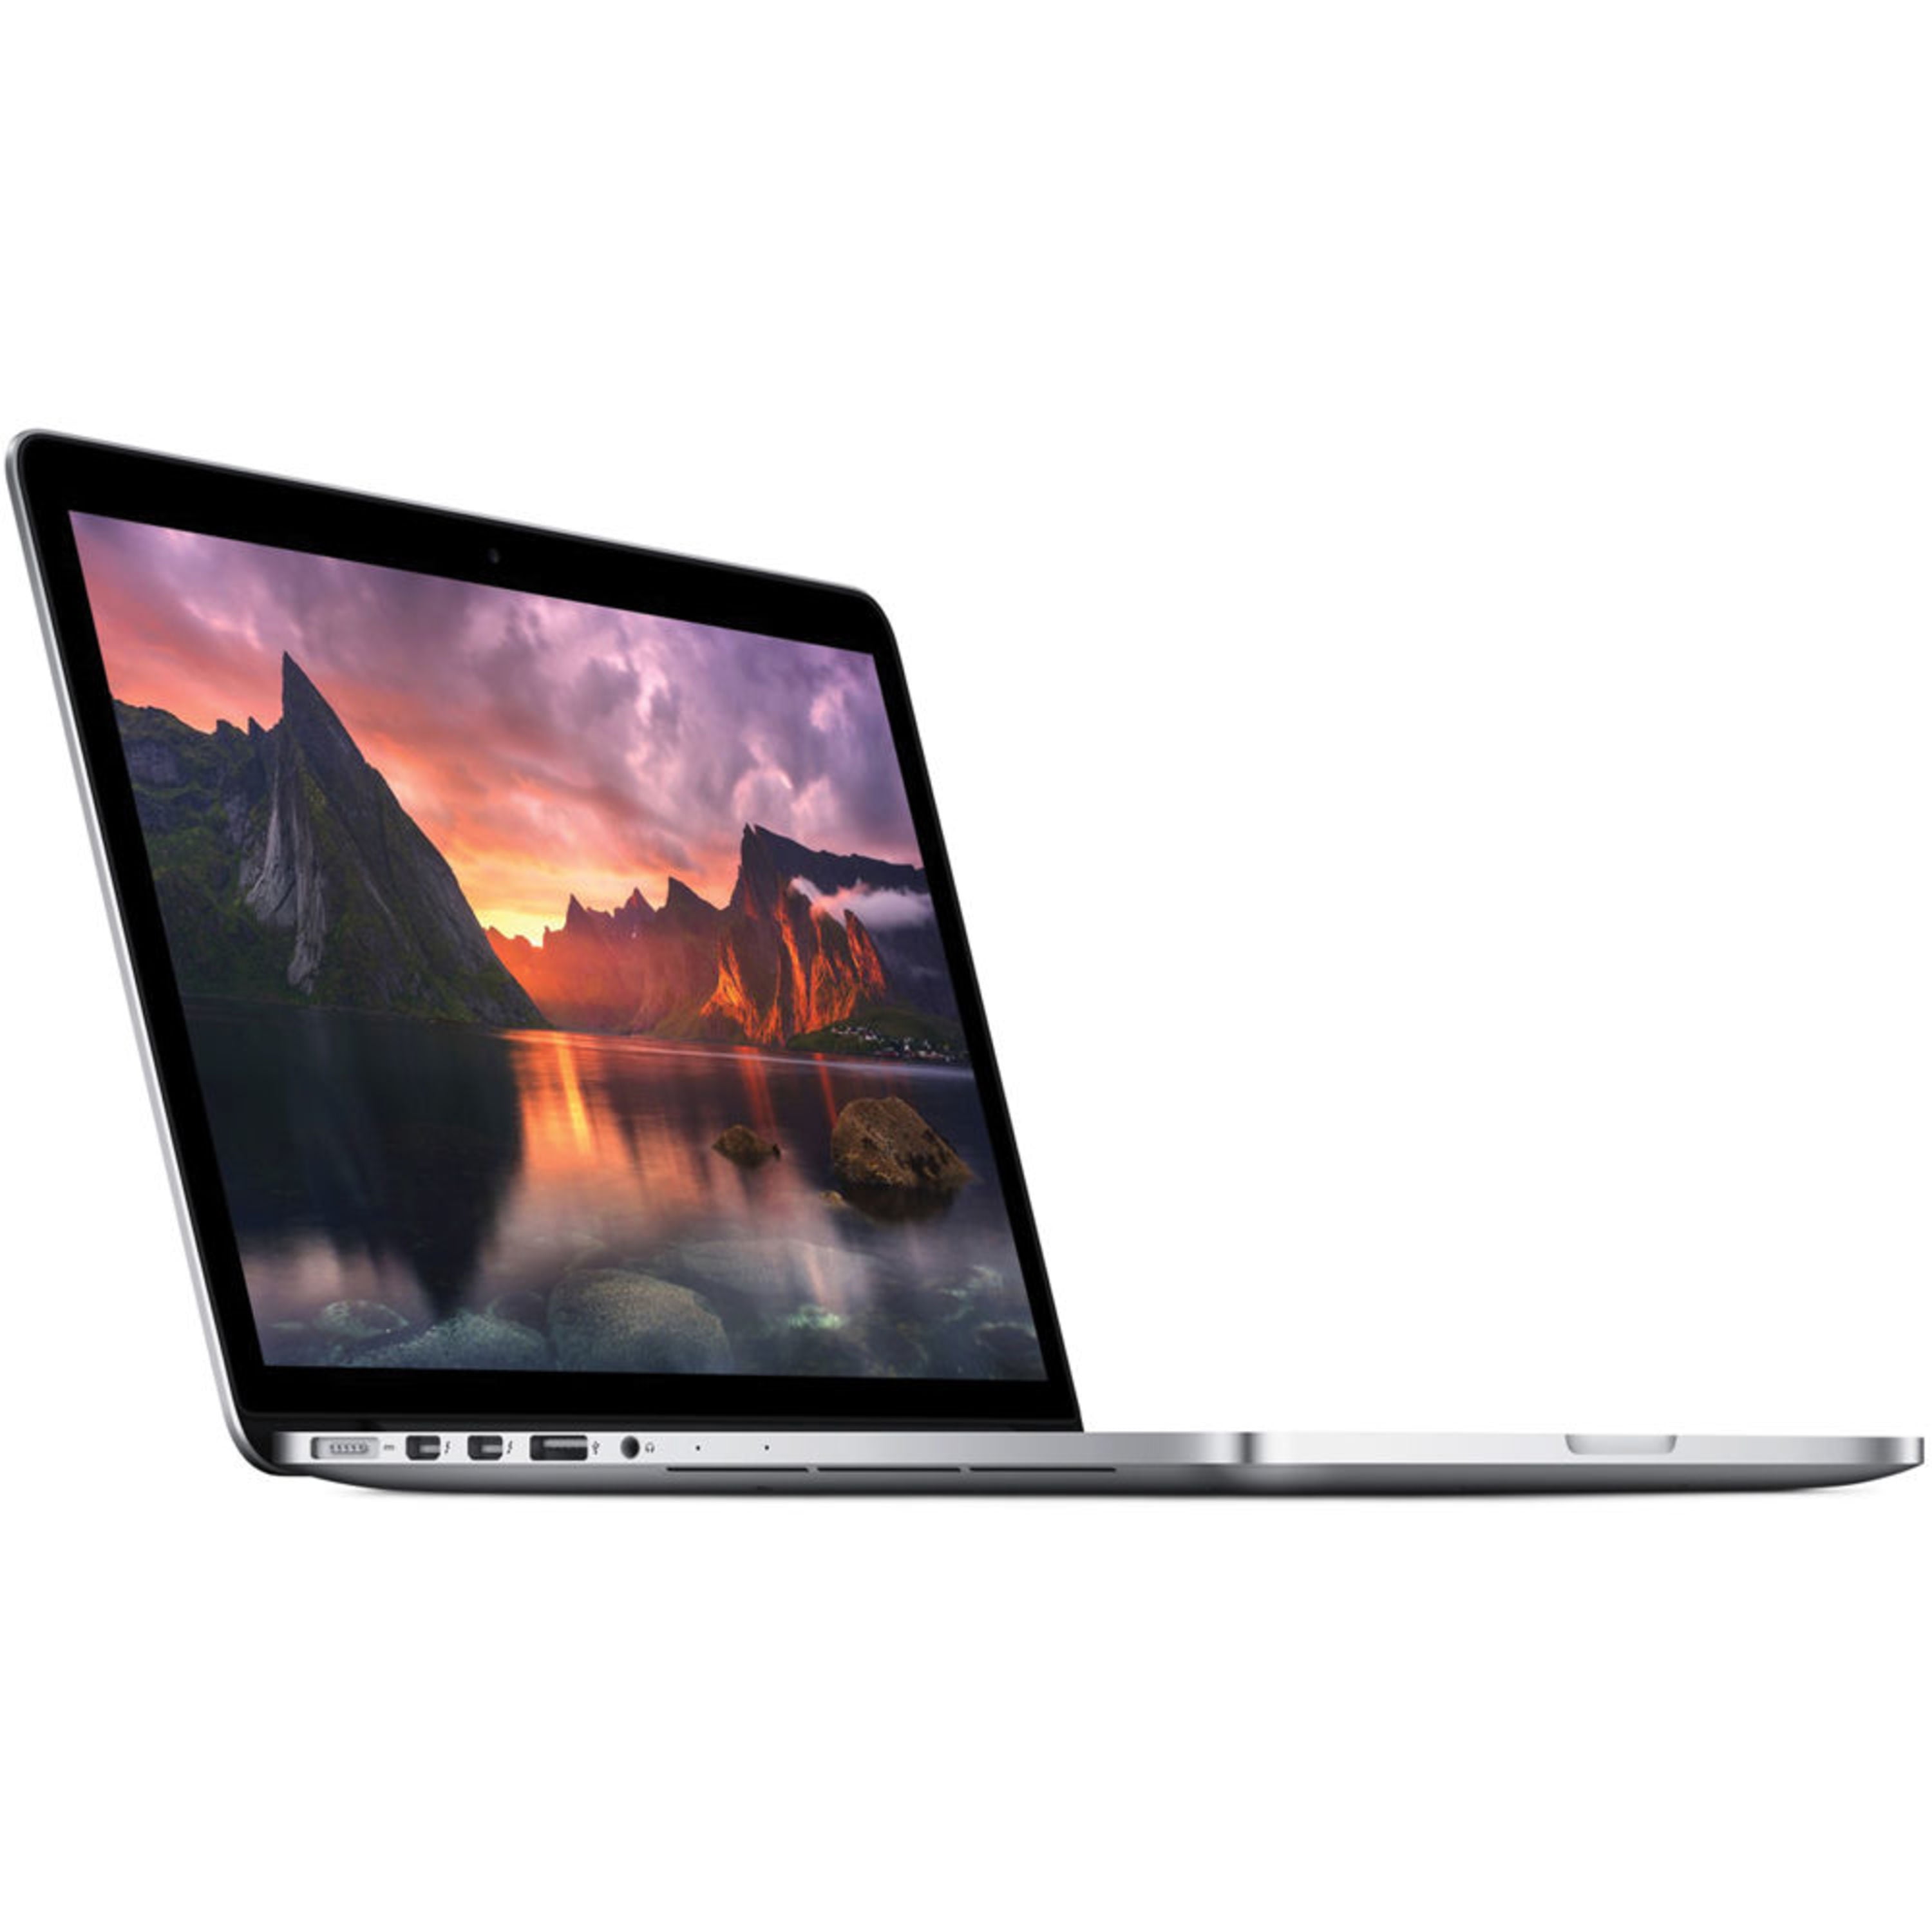 tandarts Bediening mogelijk Heel boos Apple MacBook Pro 13-inch 2014 Laptop (MGX92LL/A), 512GB SSD 8GB Memory,  2.8GHz Core i5 - (Certified Used) - Walmart.com